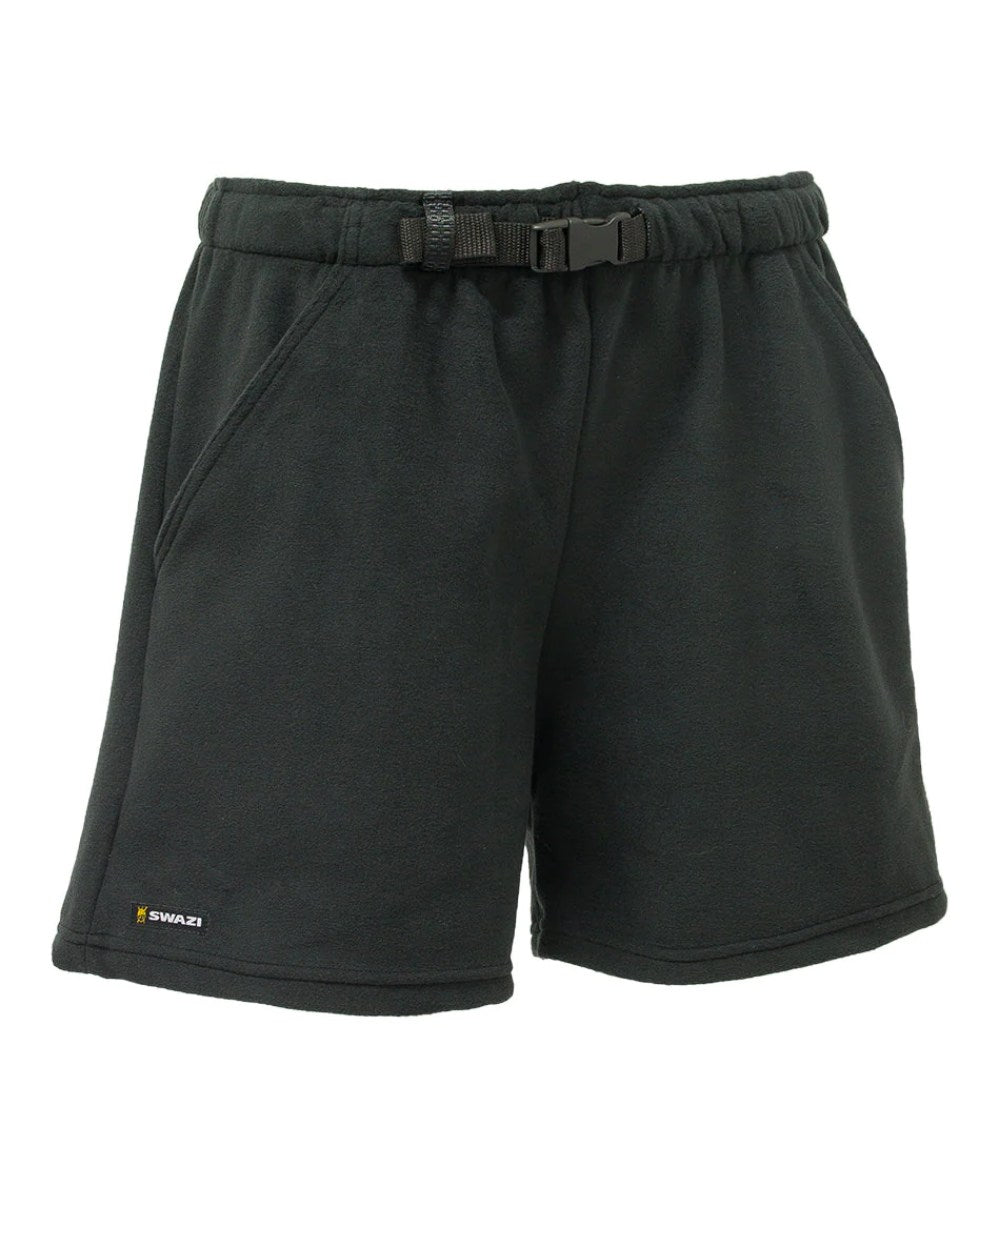 Black Coloured Swazi Micro Dribacks Shorts On A White Background 